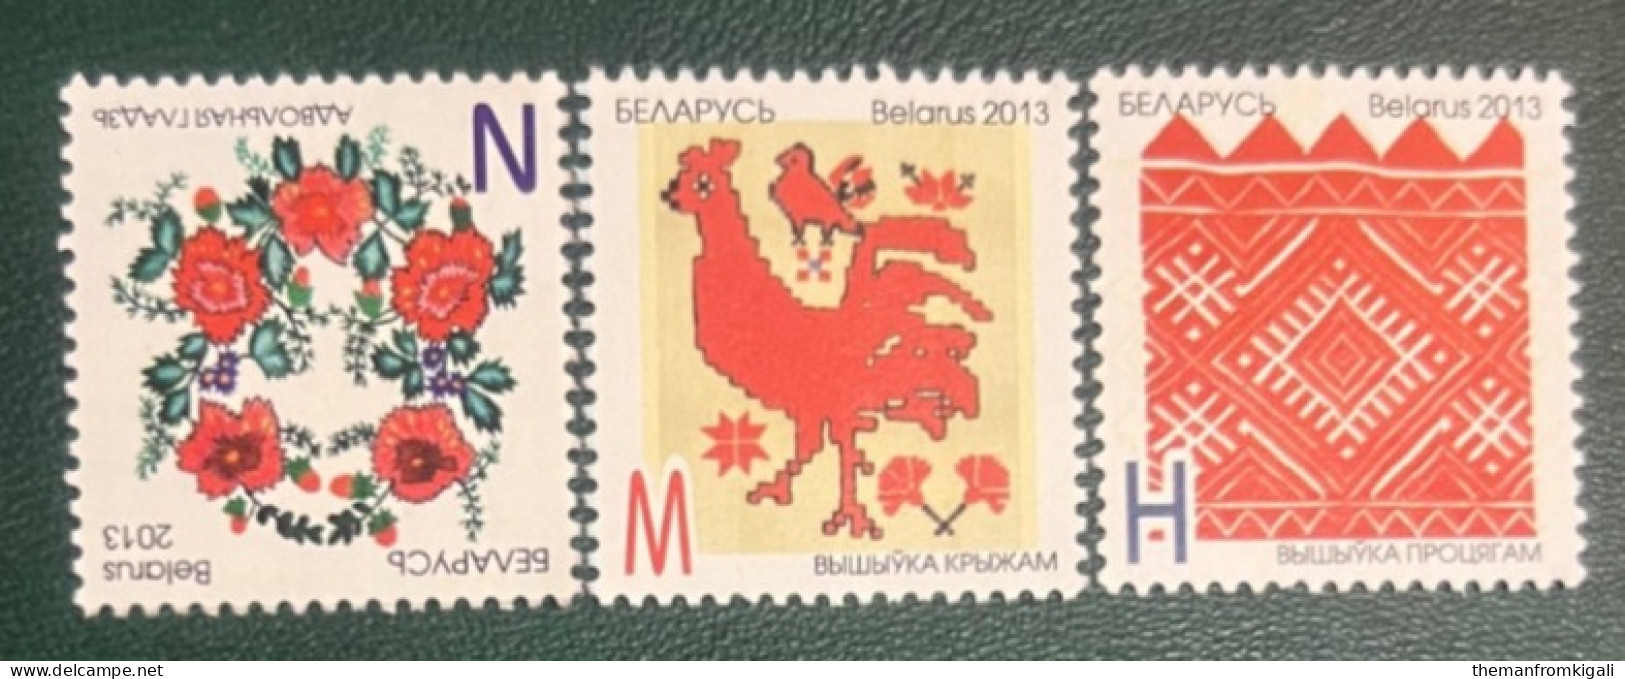 Belarus 2013 - Embroidery. - Belarus